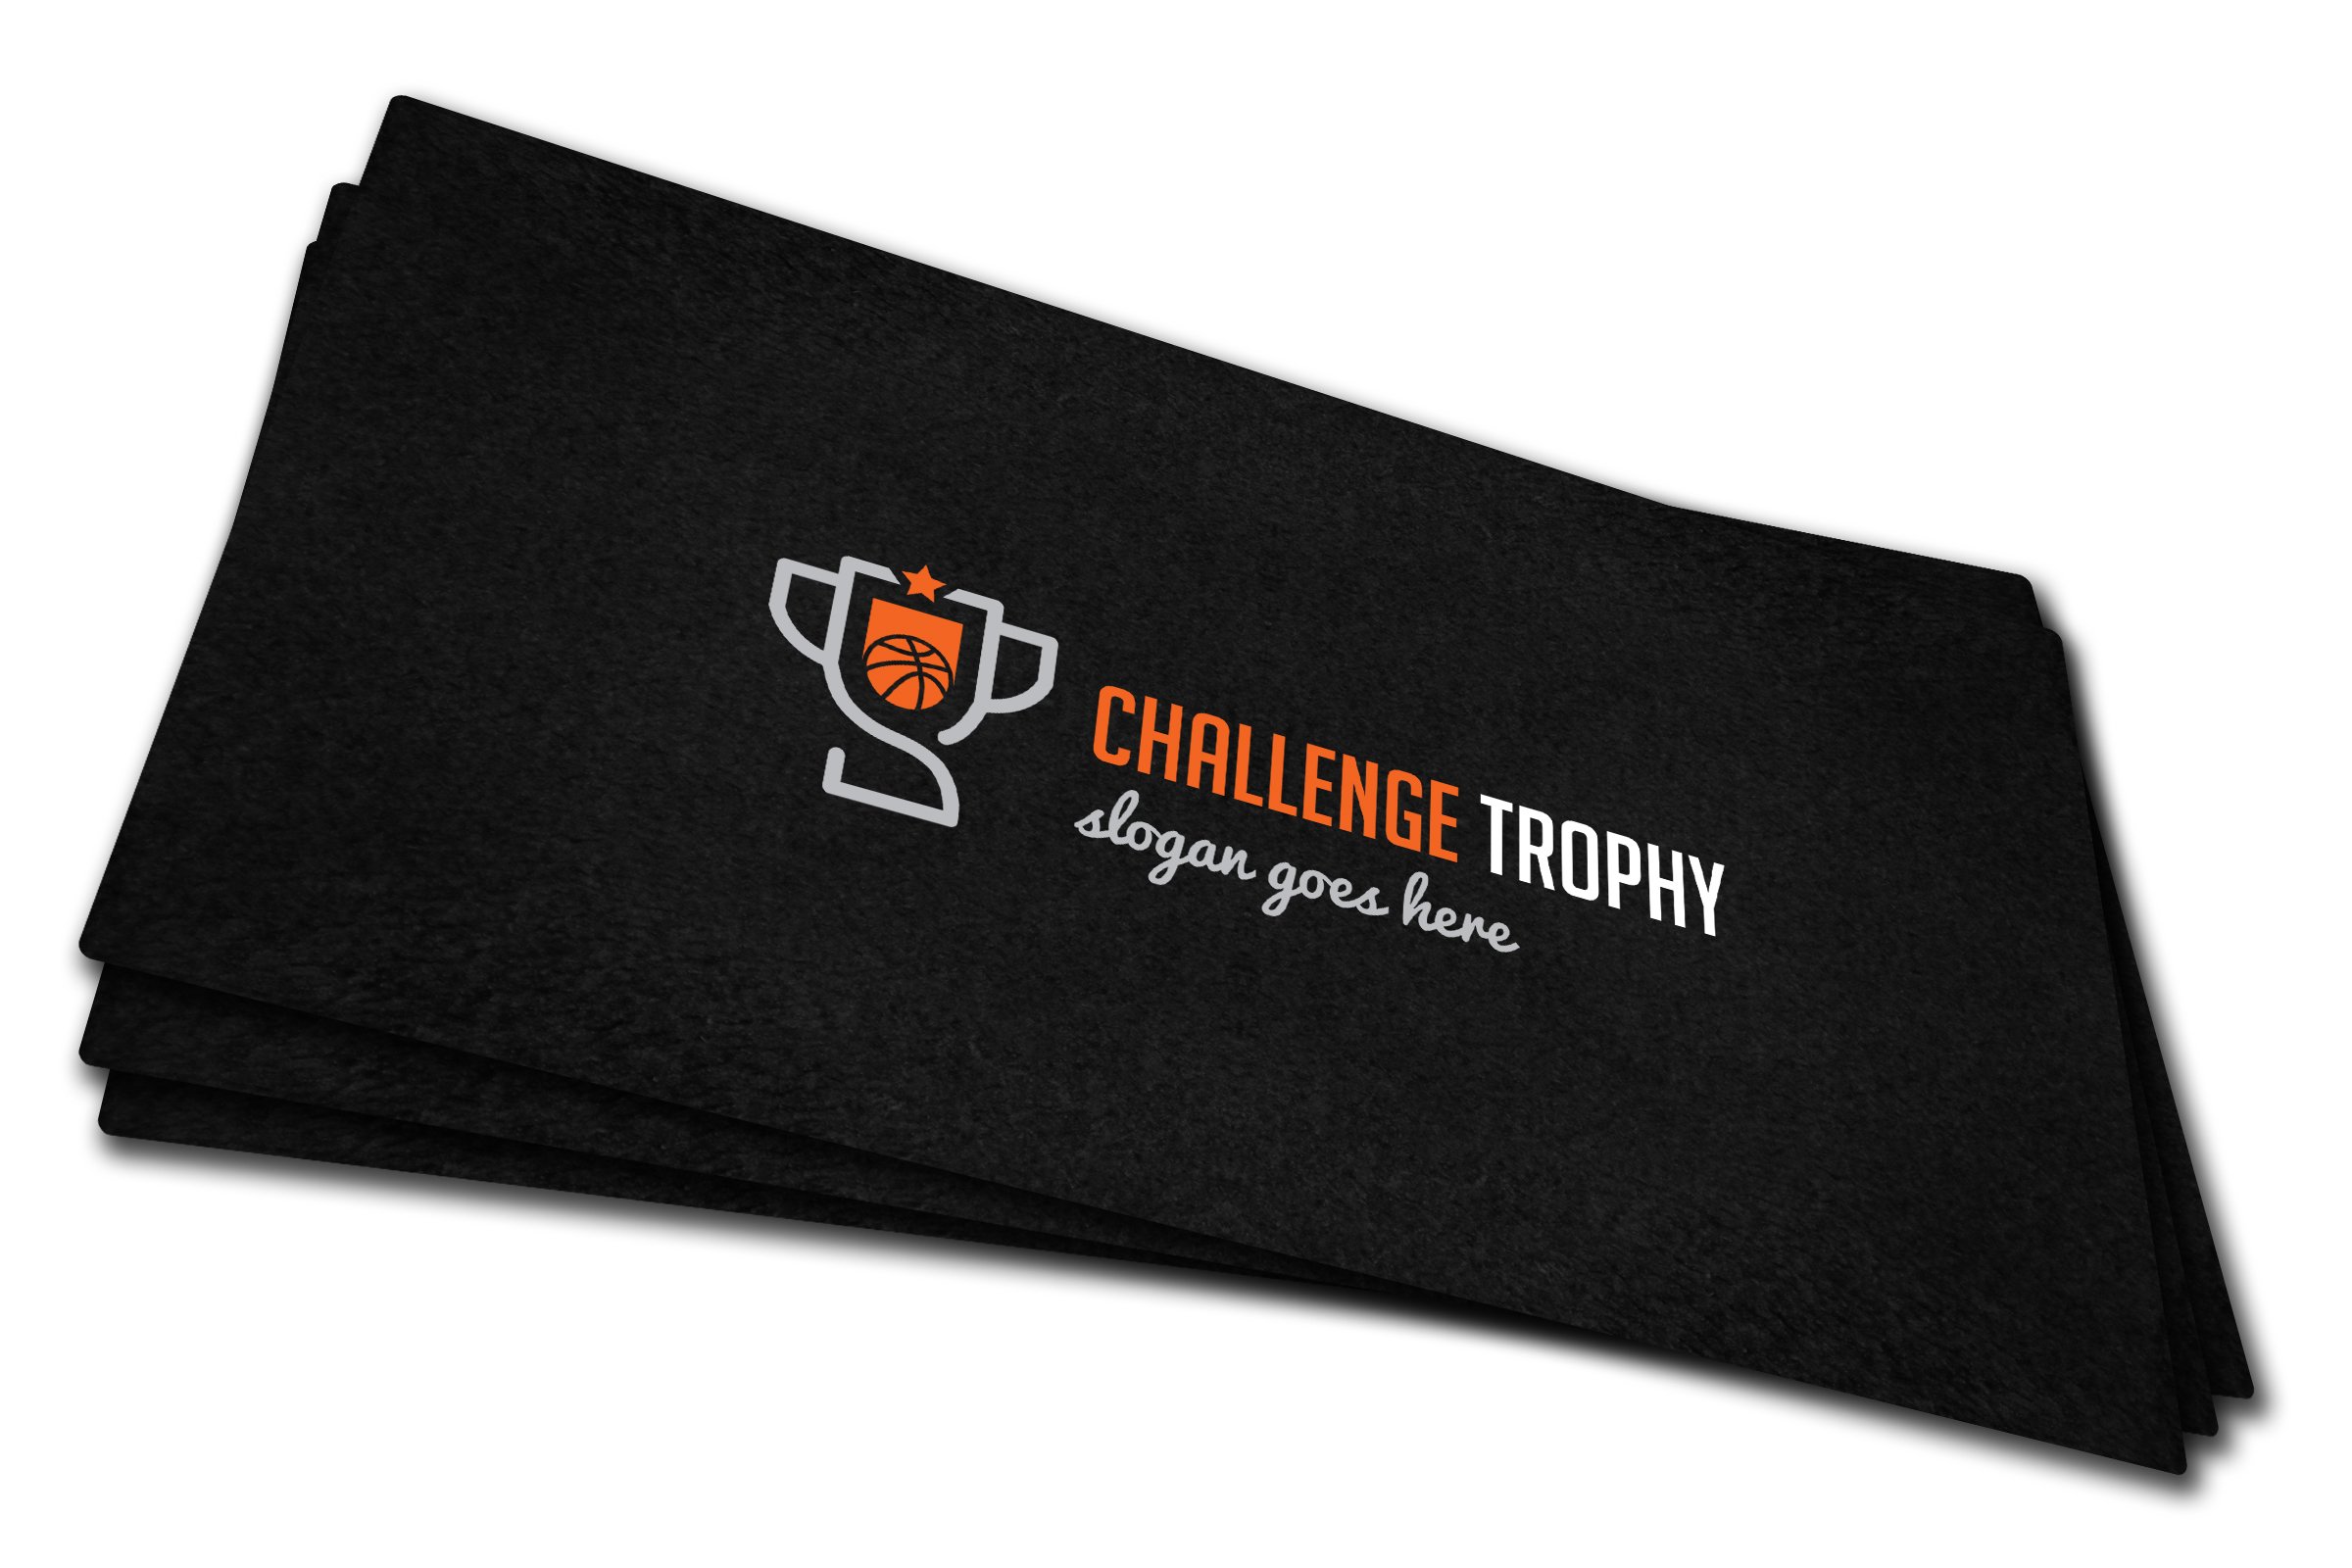 Matte black business cards with orange basketball logos.